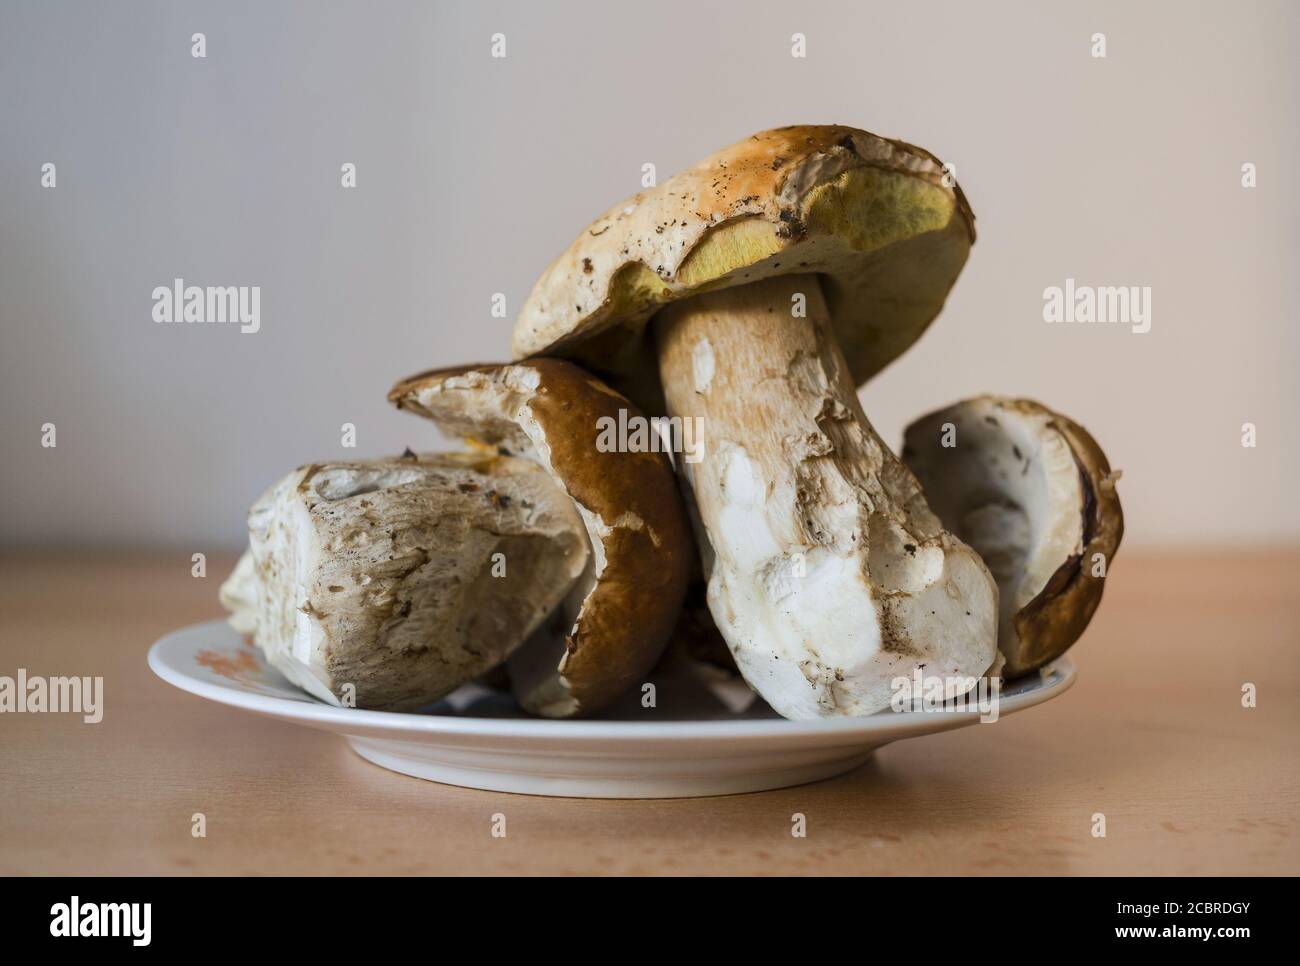 Eatable mushrooms and boletes on the plate Stock Photo